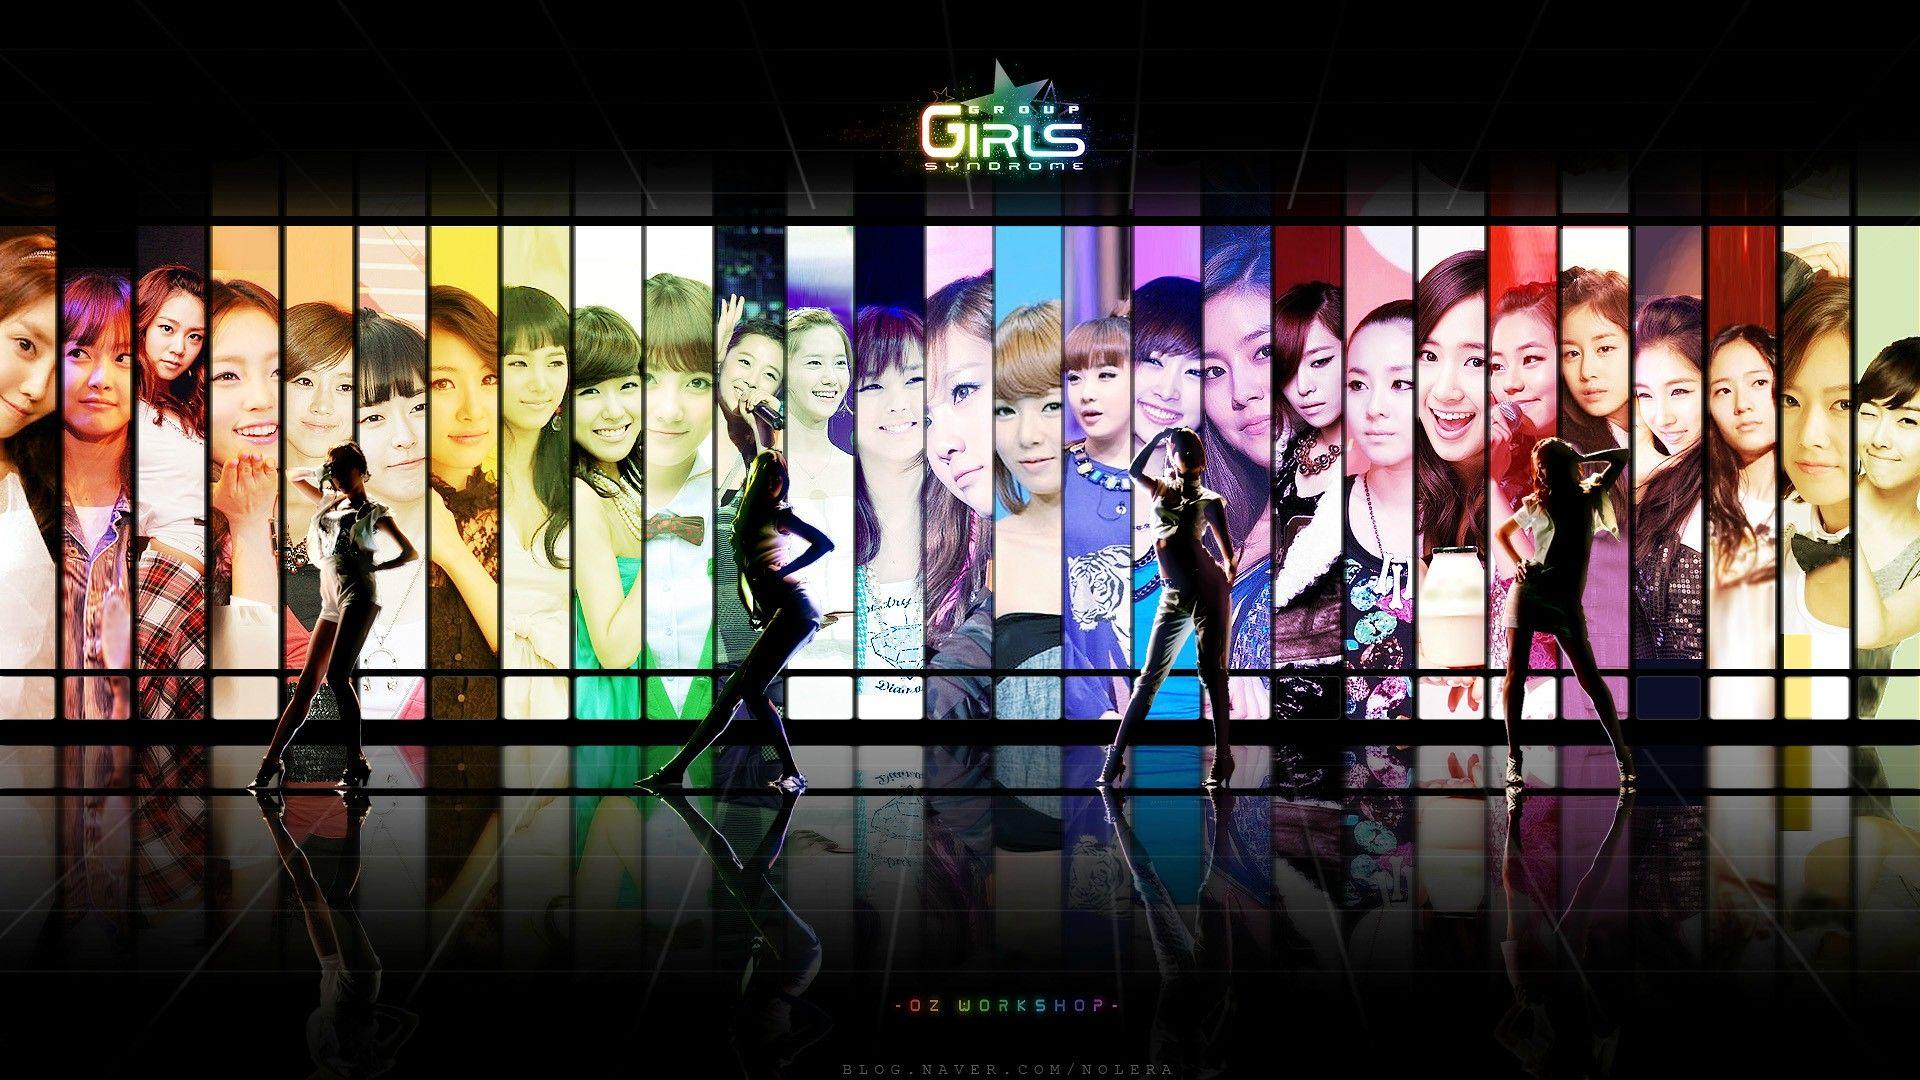 Kpop Girl Groups Wallpapers - Top Free Kpop Girl Groups Backgrounds